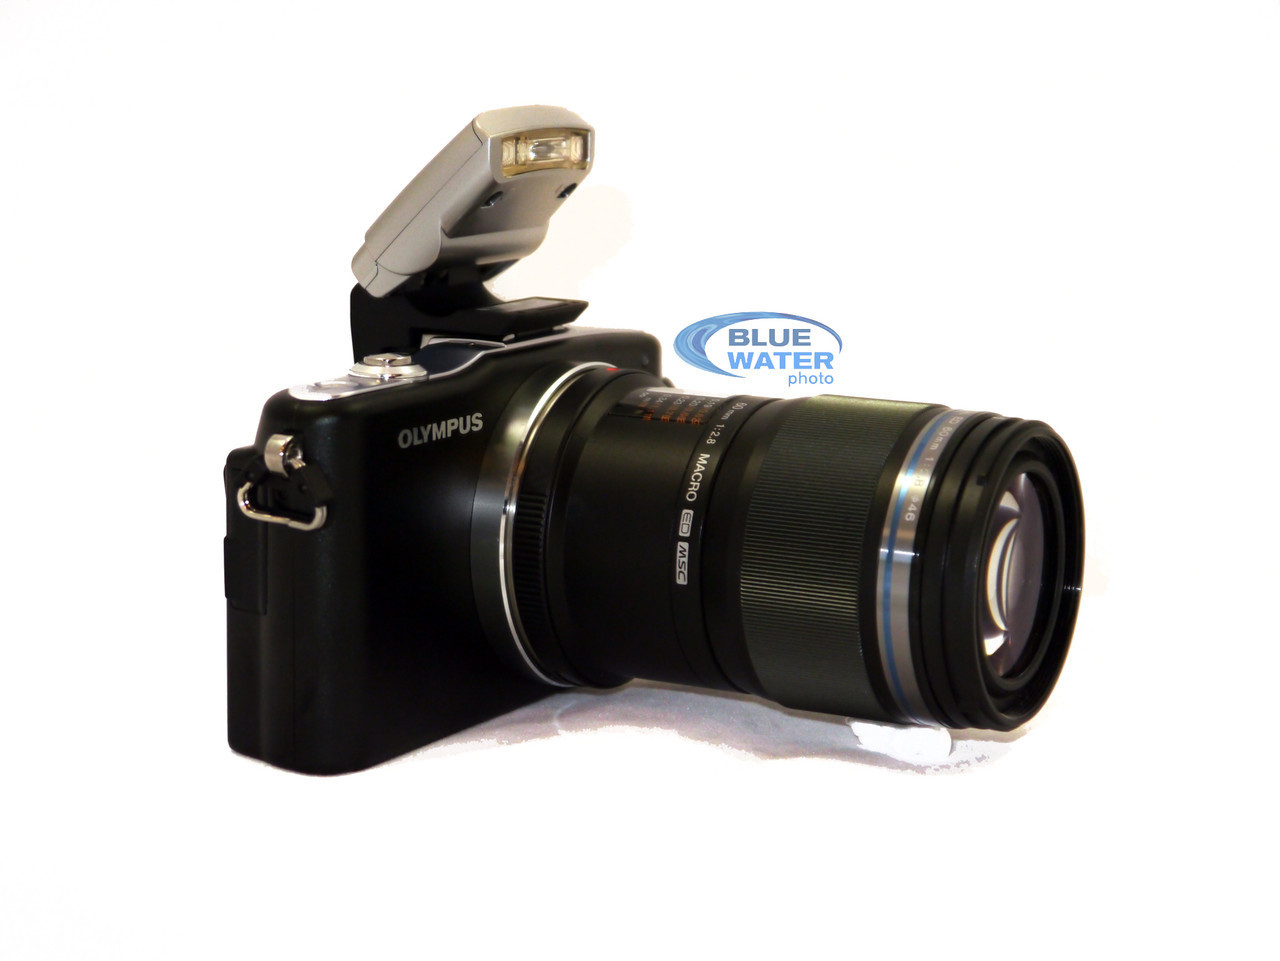 USED: Olympus M.Zuiko 60mm F2.8 Macro Lens